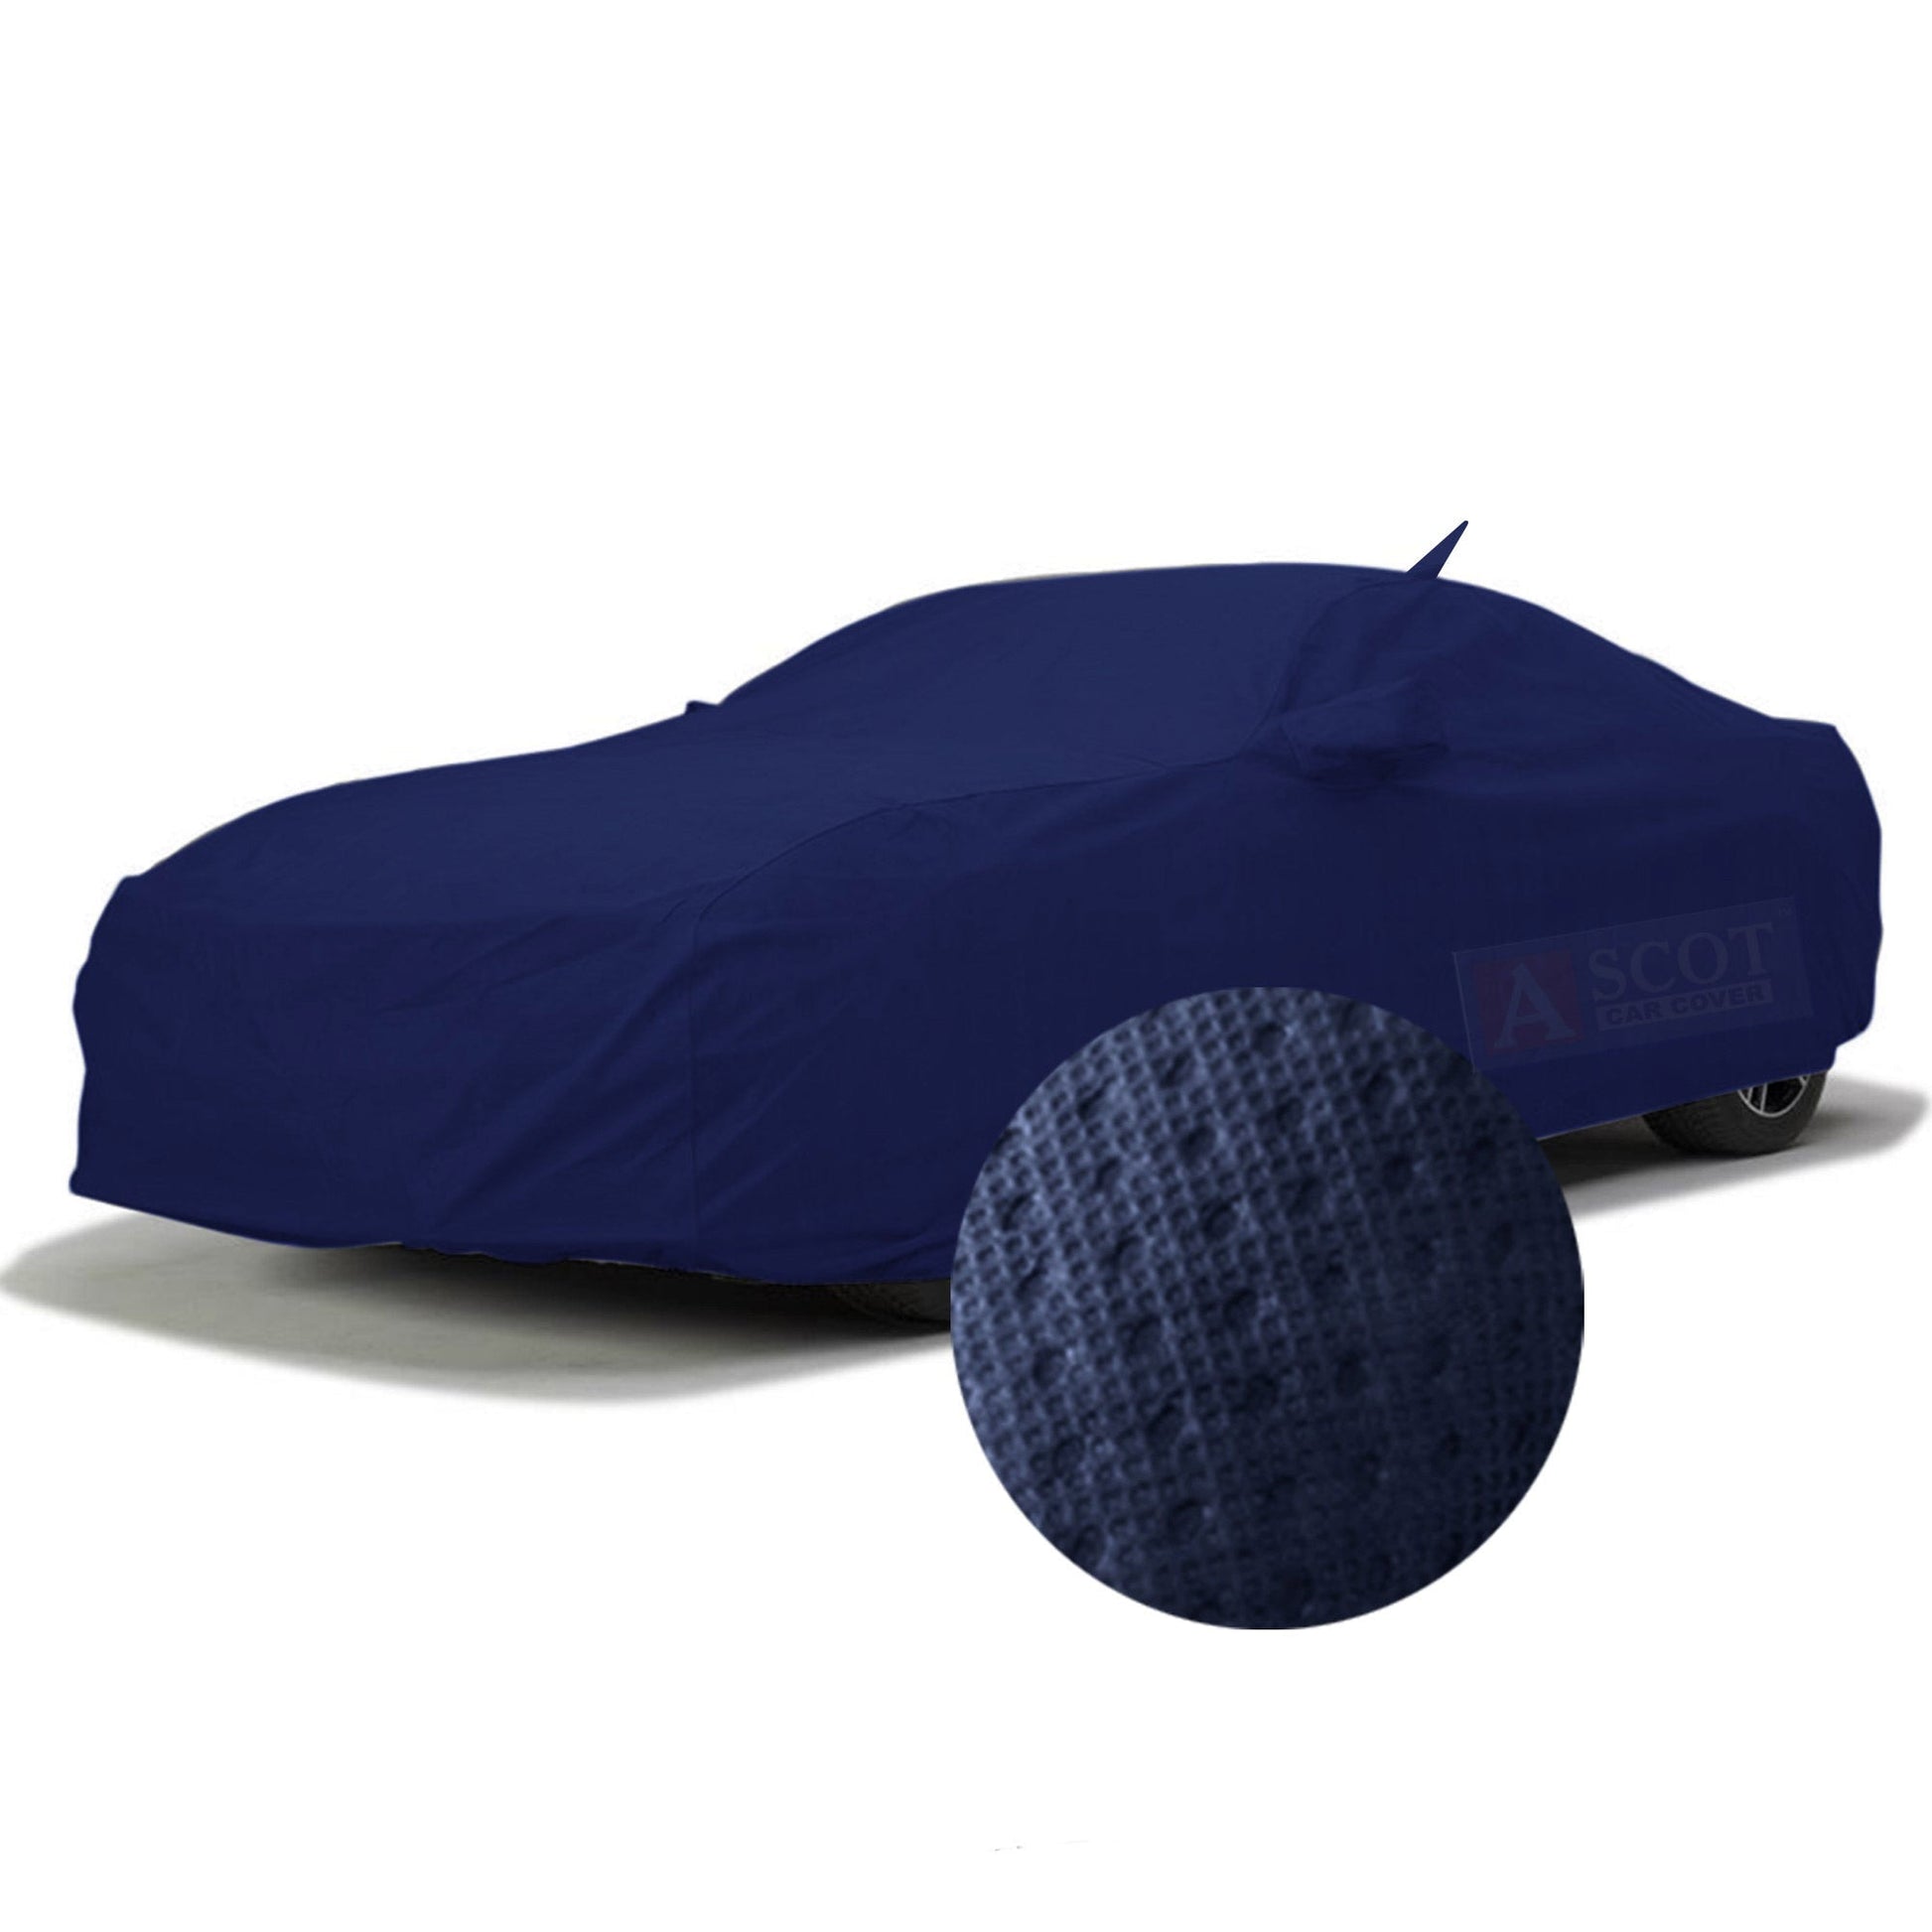 Ascot Audi A8 L Car Cover Waterproof 2010-2017 Model 3 Layers